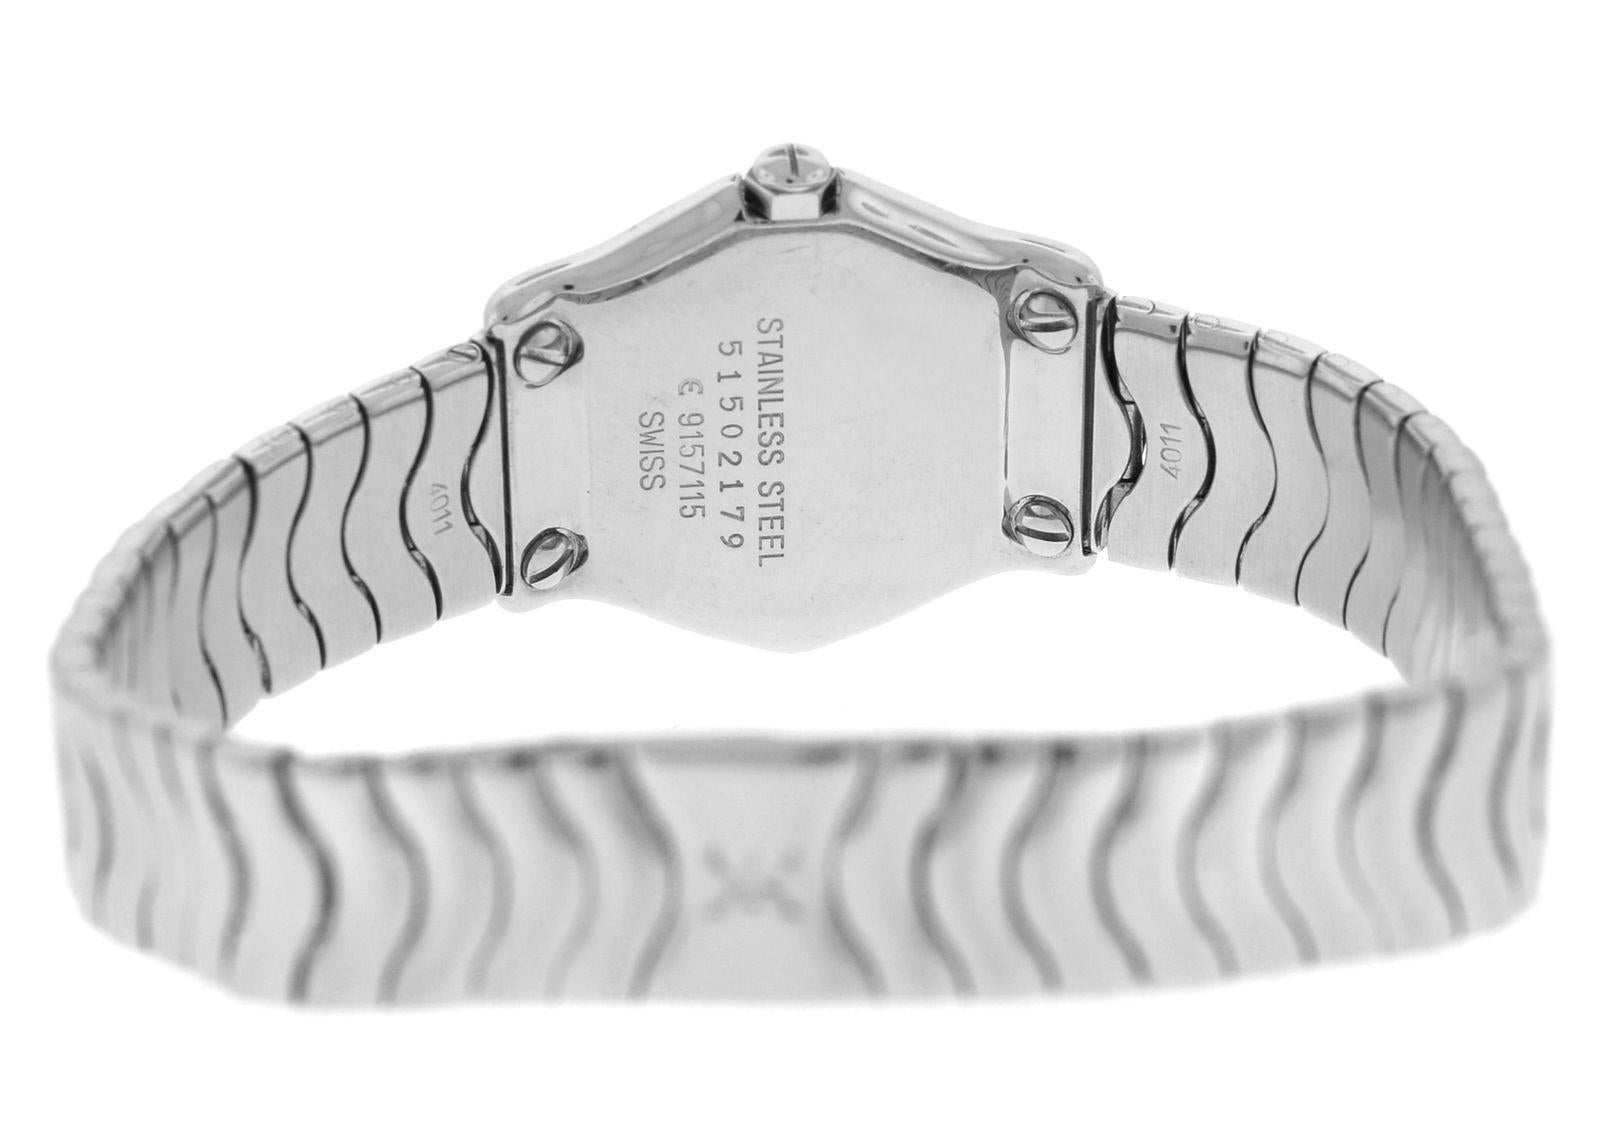 Women's Authentic Ladies Ebel Sport Wave Steel Diamond Quartz Watch For Sale